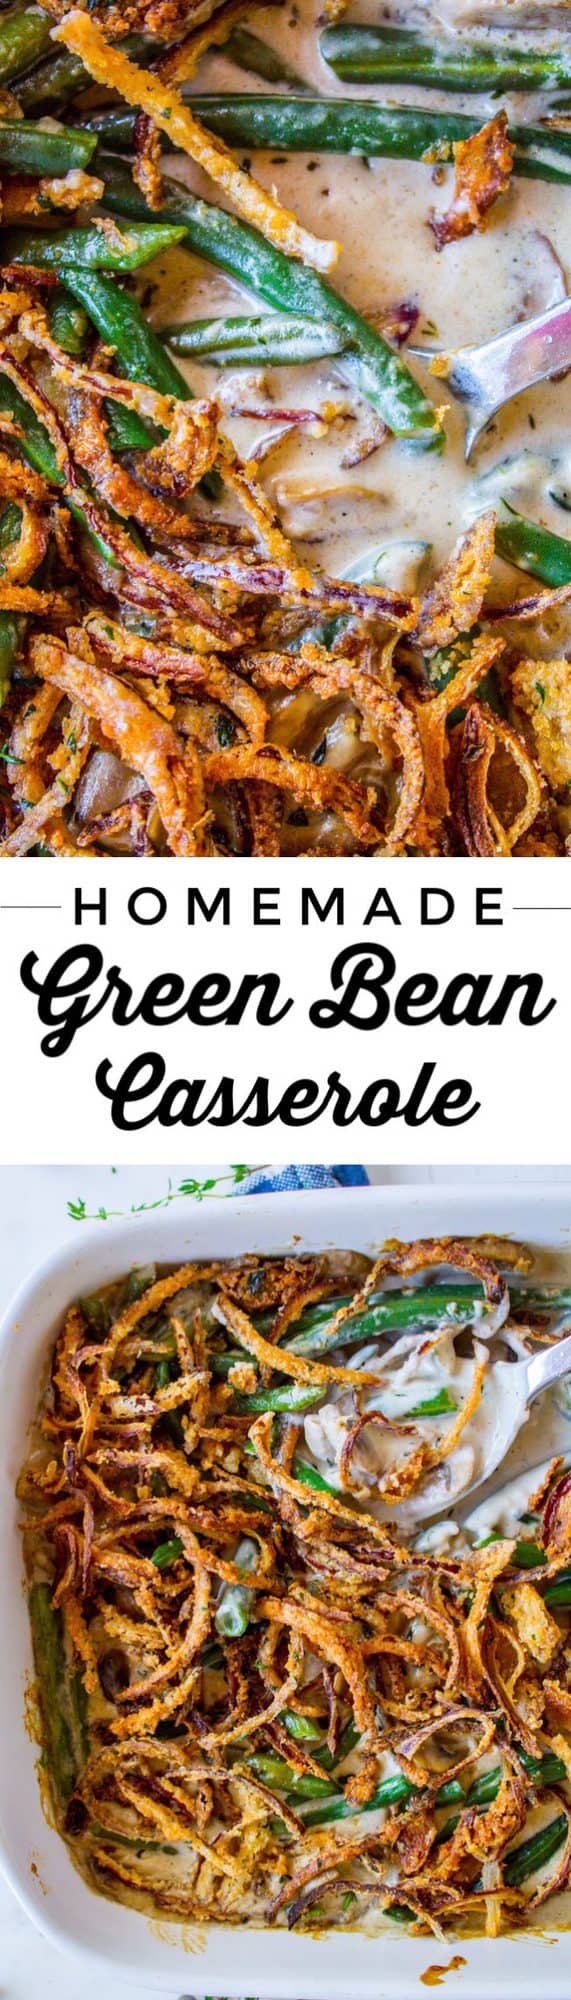 Homemade Green Bean Casserole Recipe - The Food Charlatan